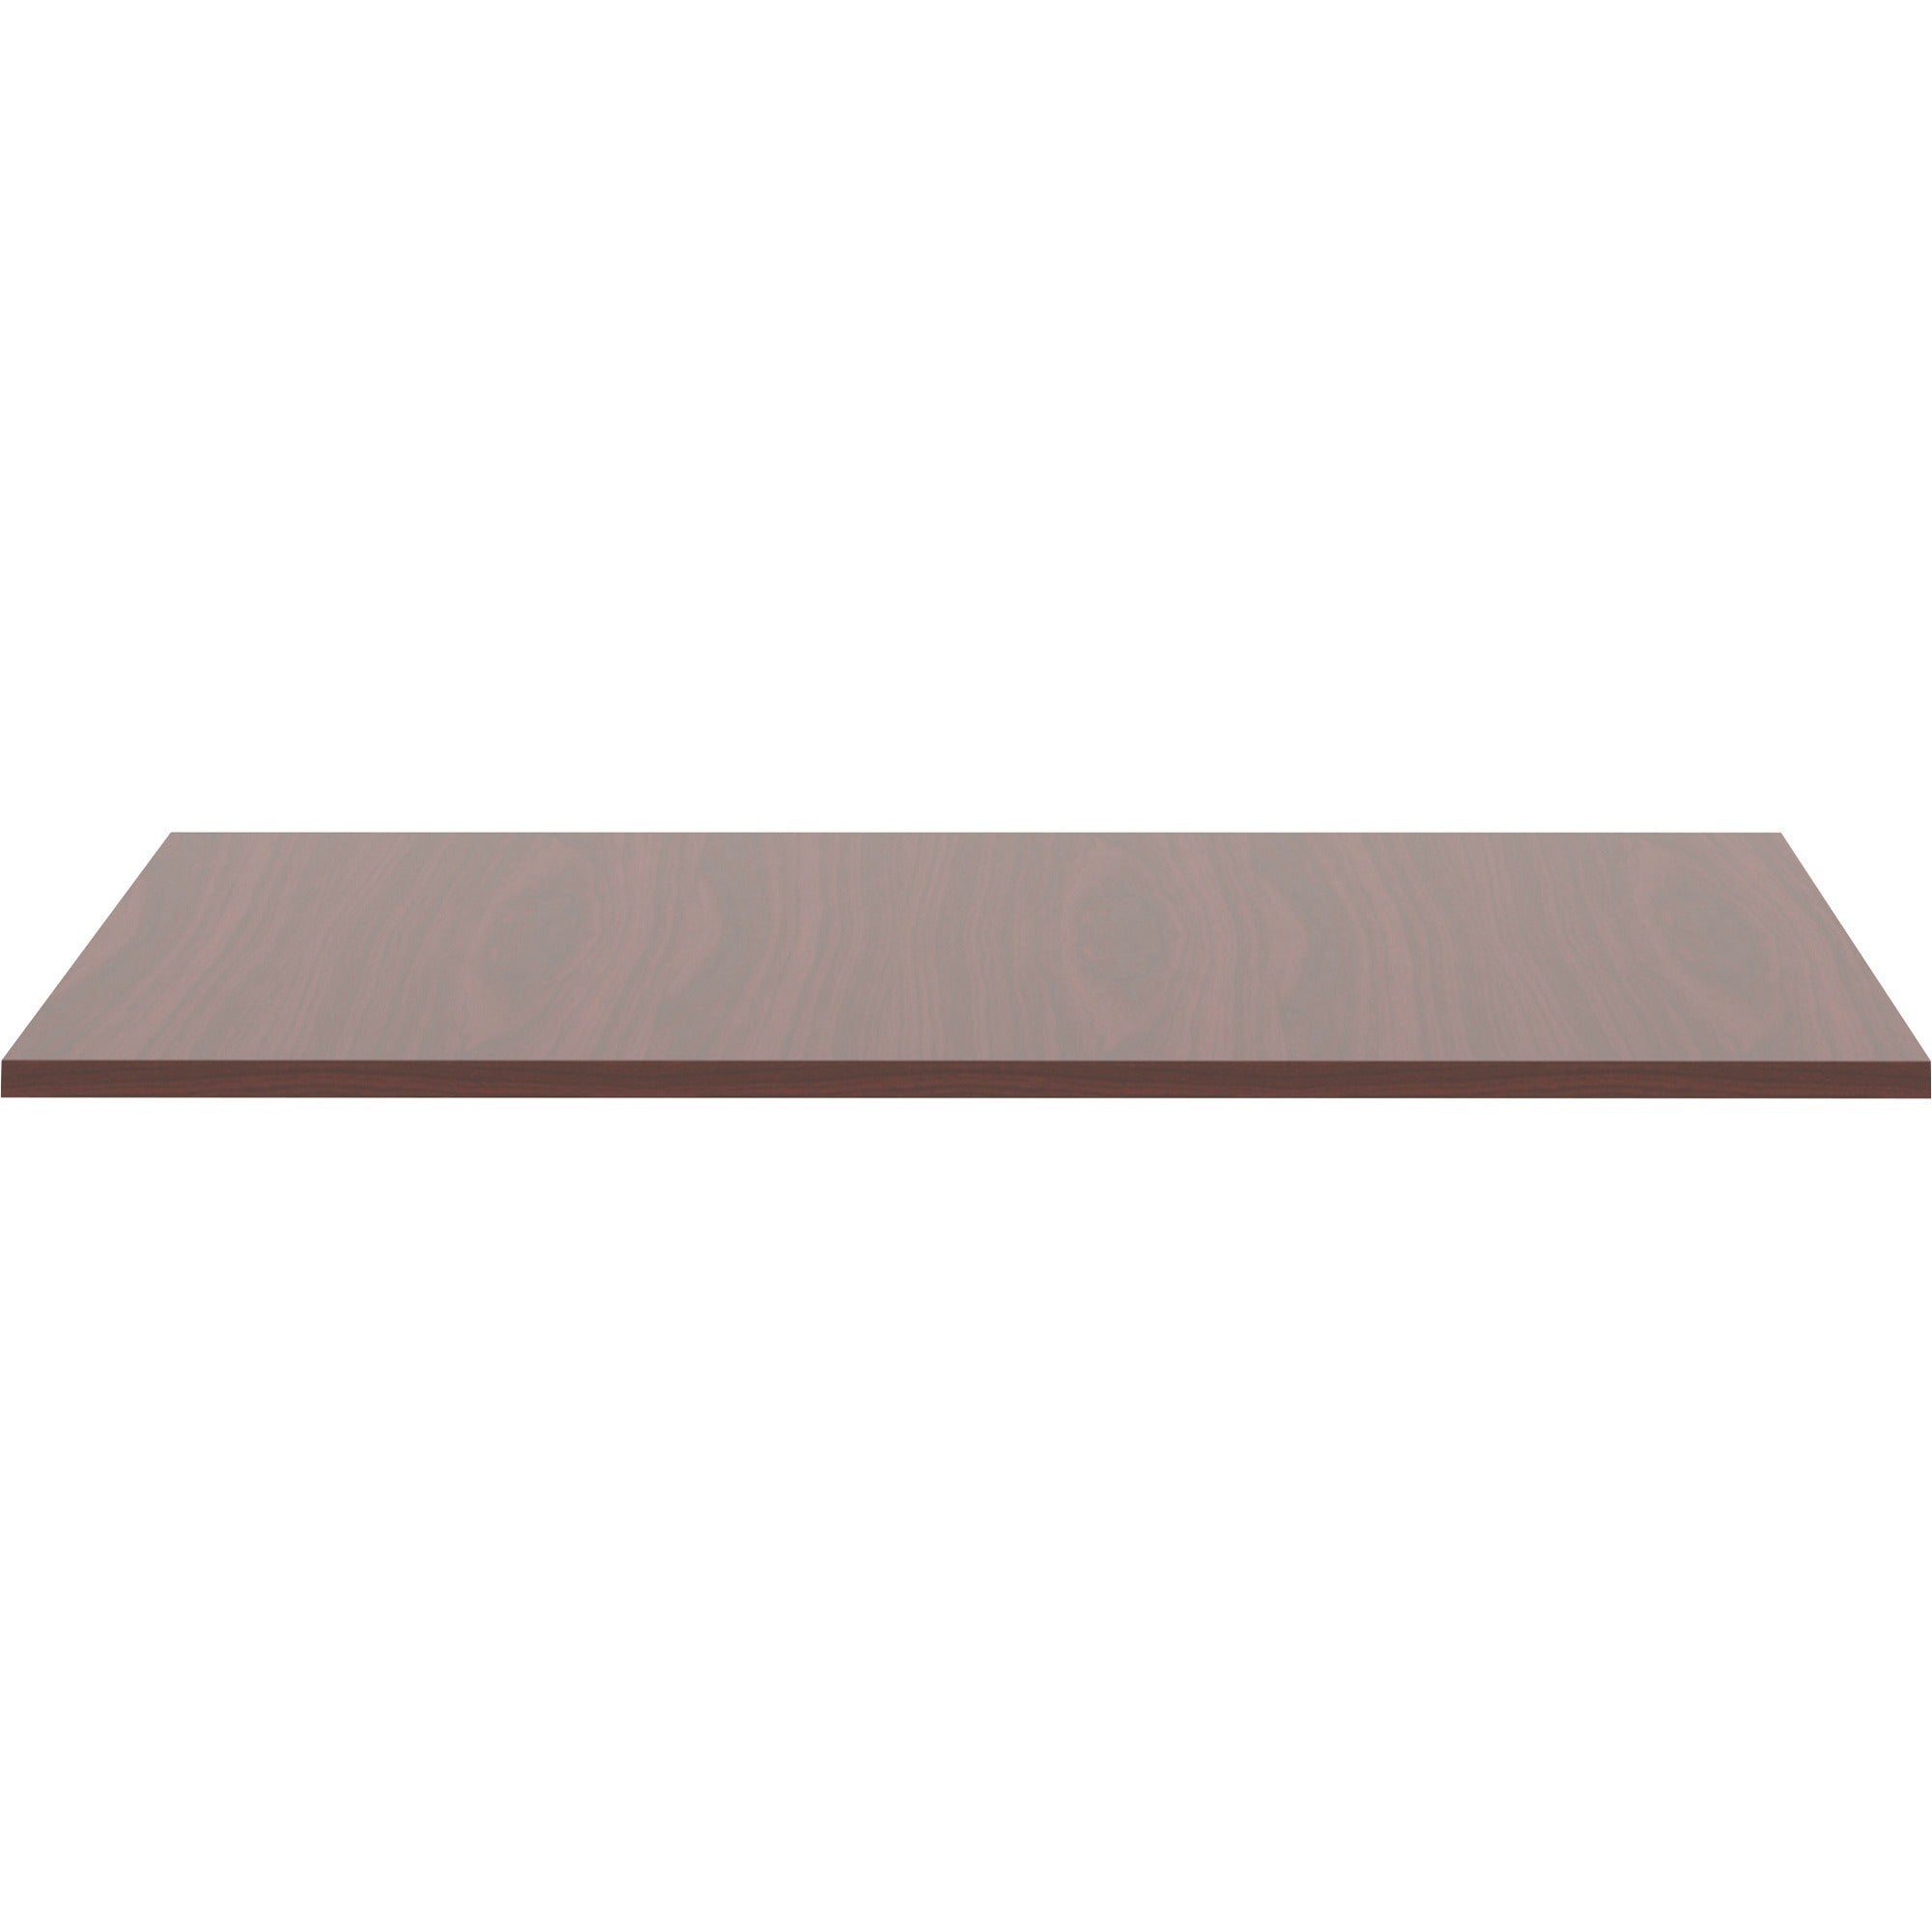 lorell-revelance-conference-rectangular-tabletop-599-x-473-x-1-x-1-material-laminate-finish-mahogany_llr16255 - 4